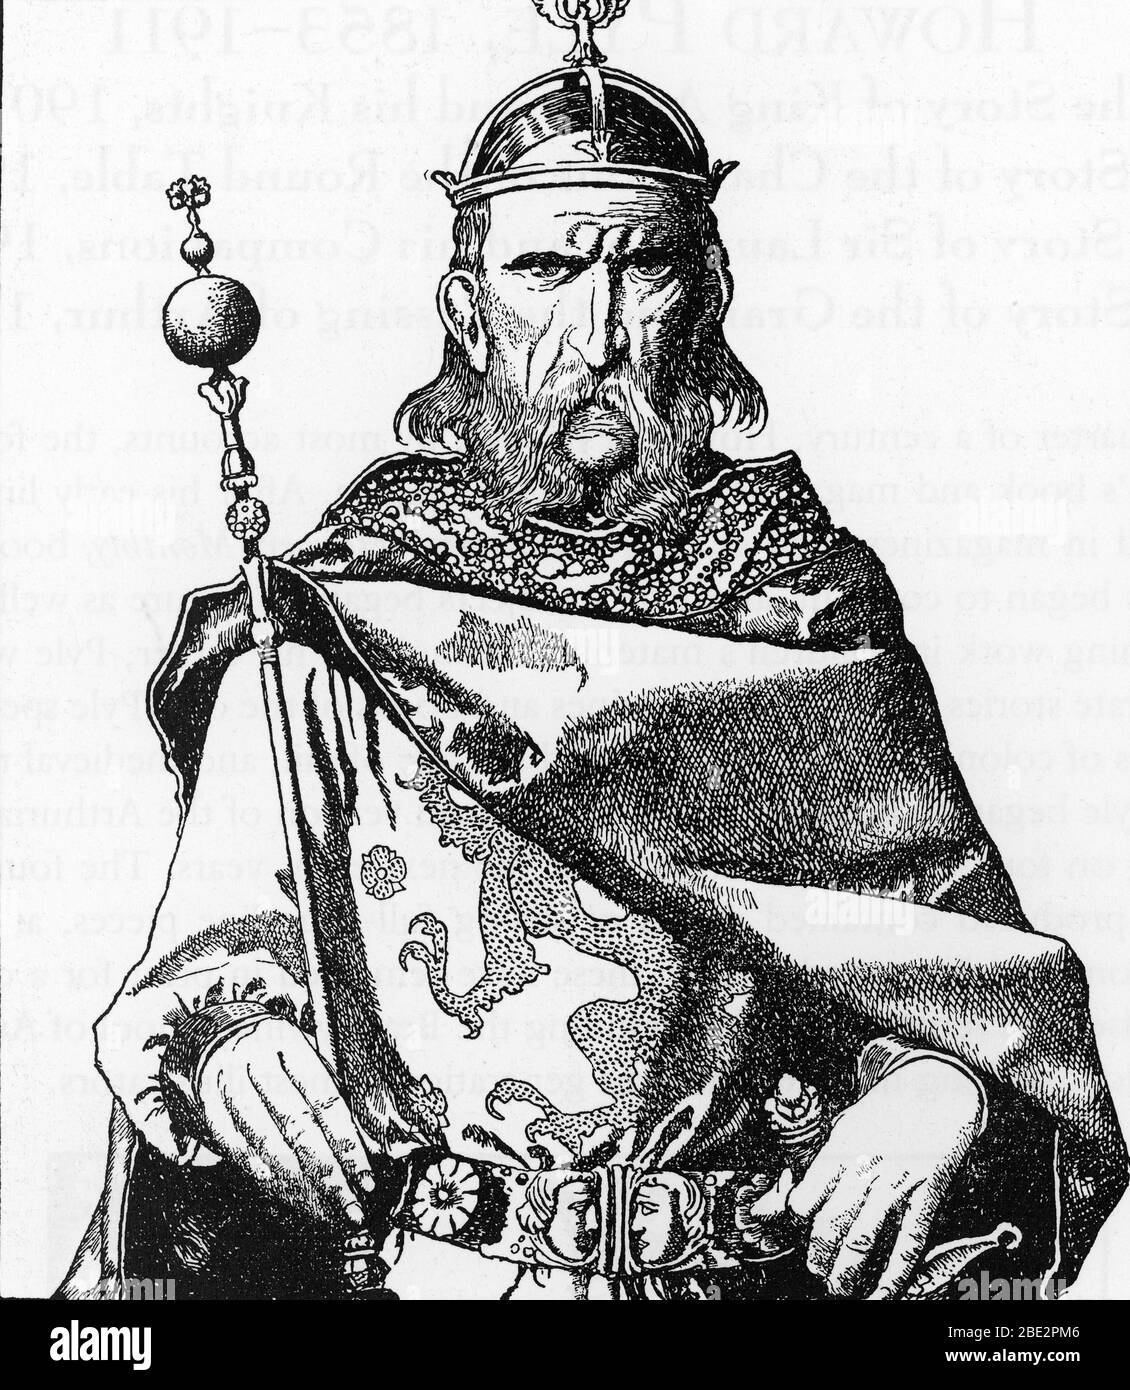 'Legende arthurienne : Portrait de Uther Pendragon, pere du roi Arthur' (Portrait of Uther Pendragon, legendary king of sub-Roman Britain and the fath Stock Photo